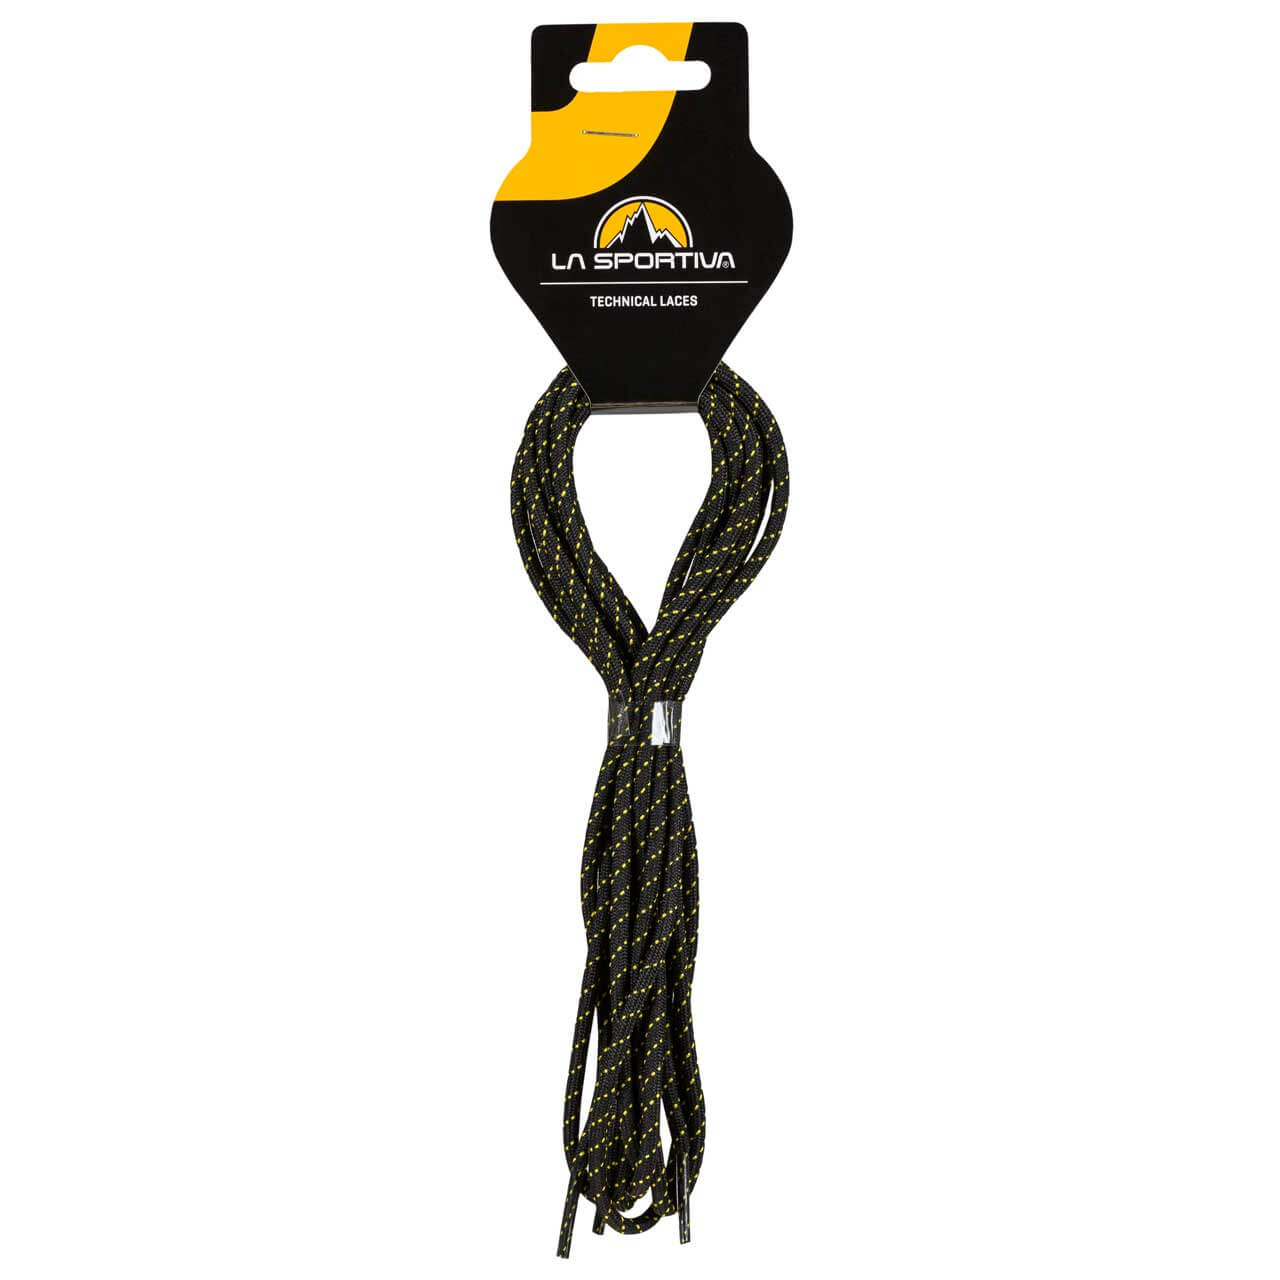 La Sportiva Approach Laces Schuhbänder - 147 cm, Black/Yellow